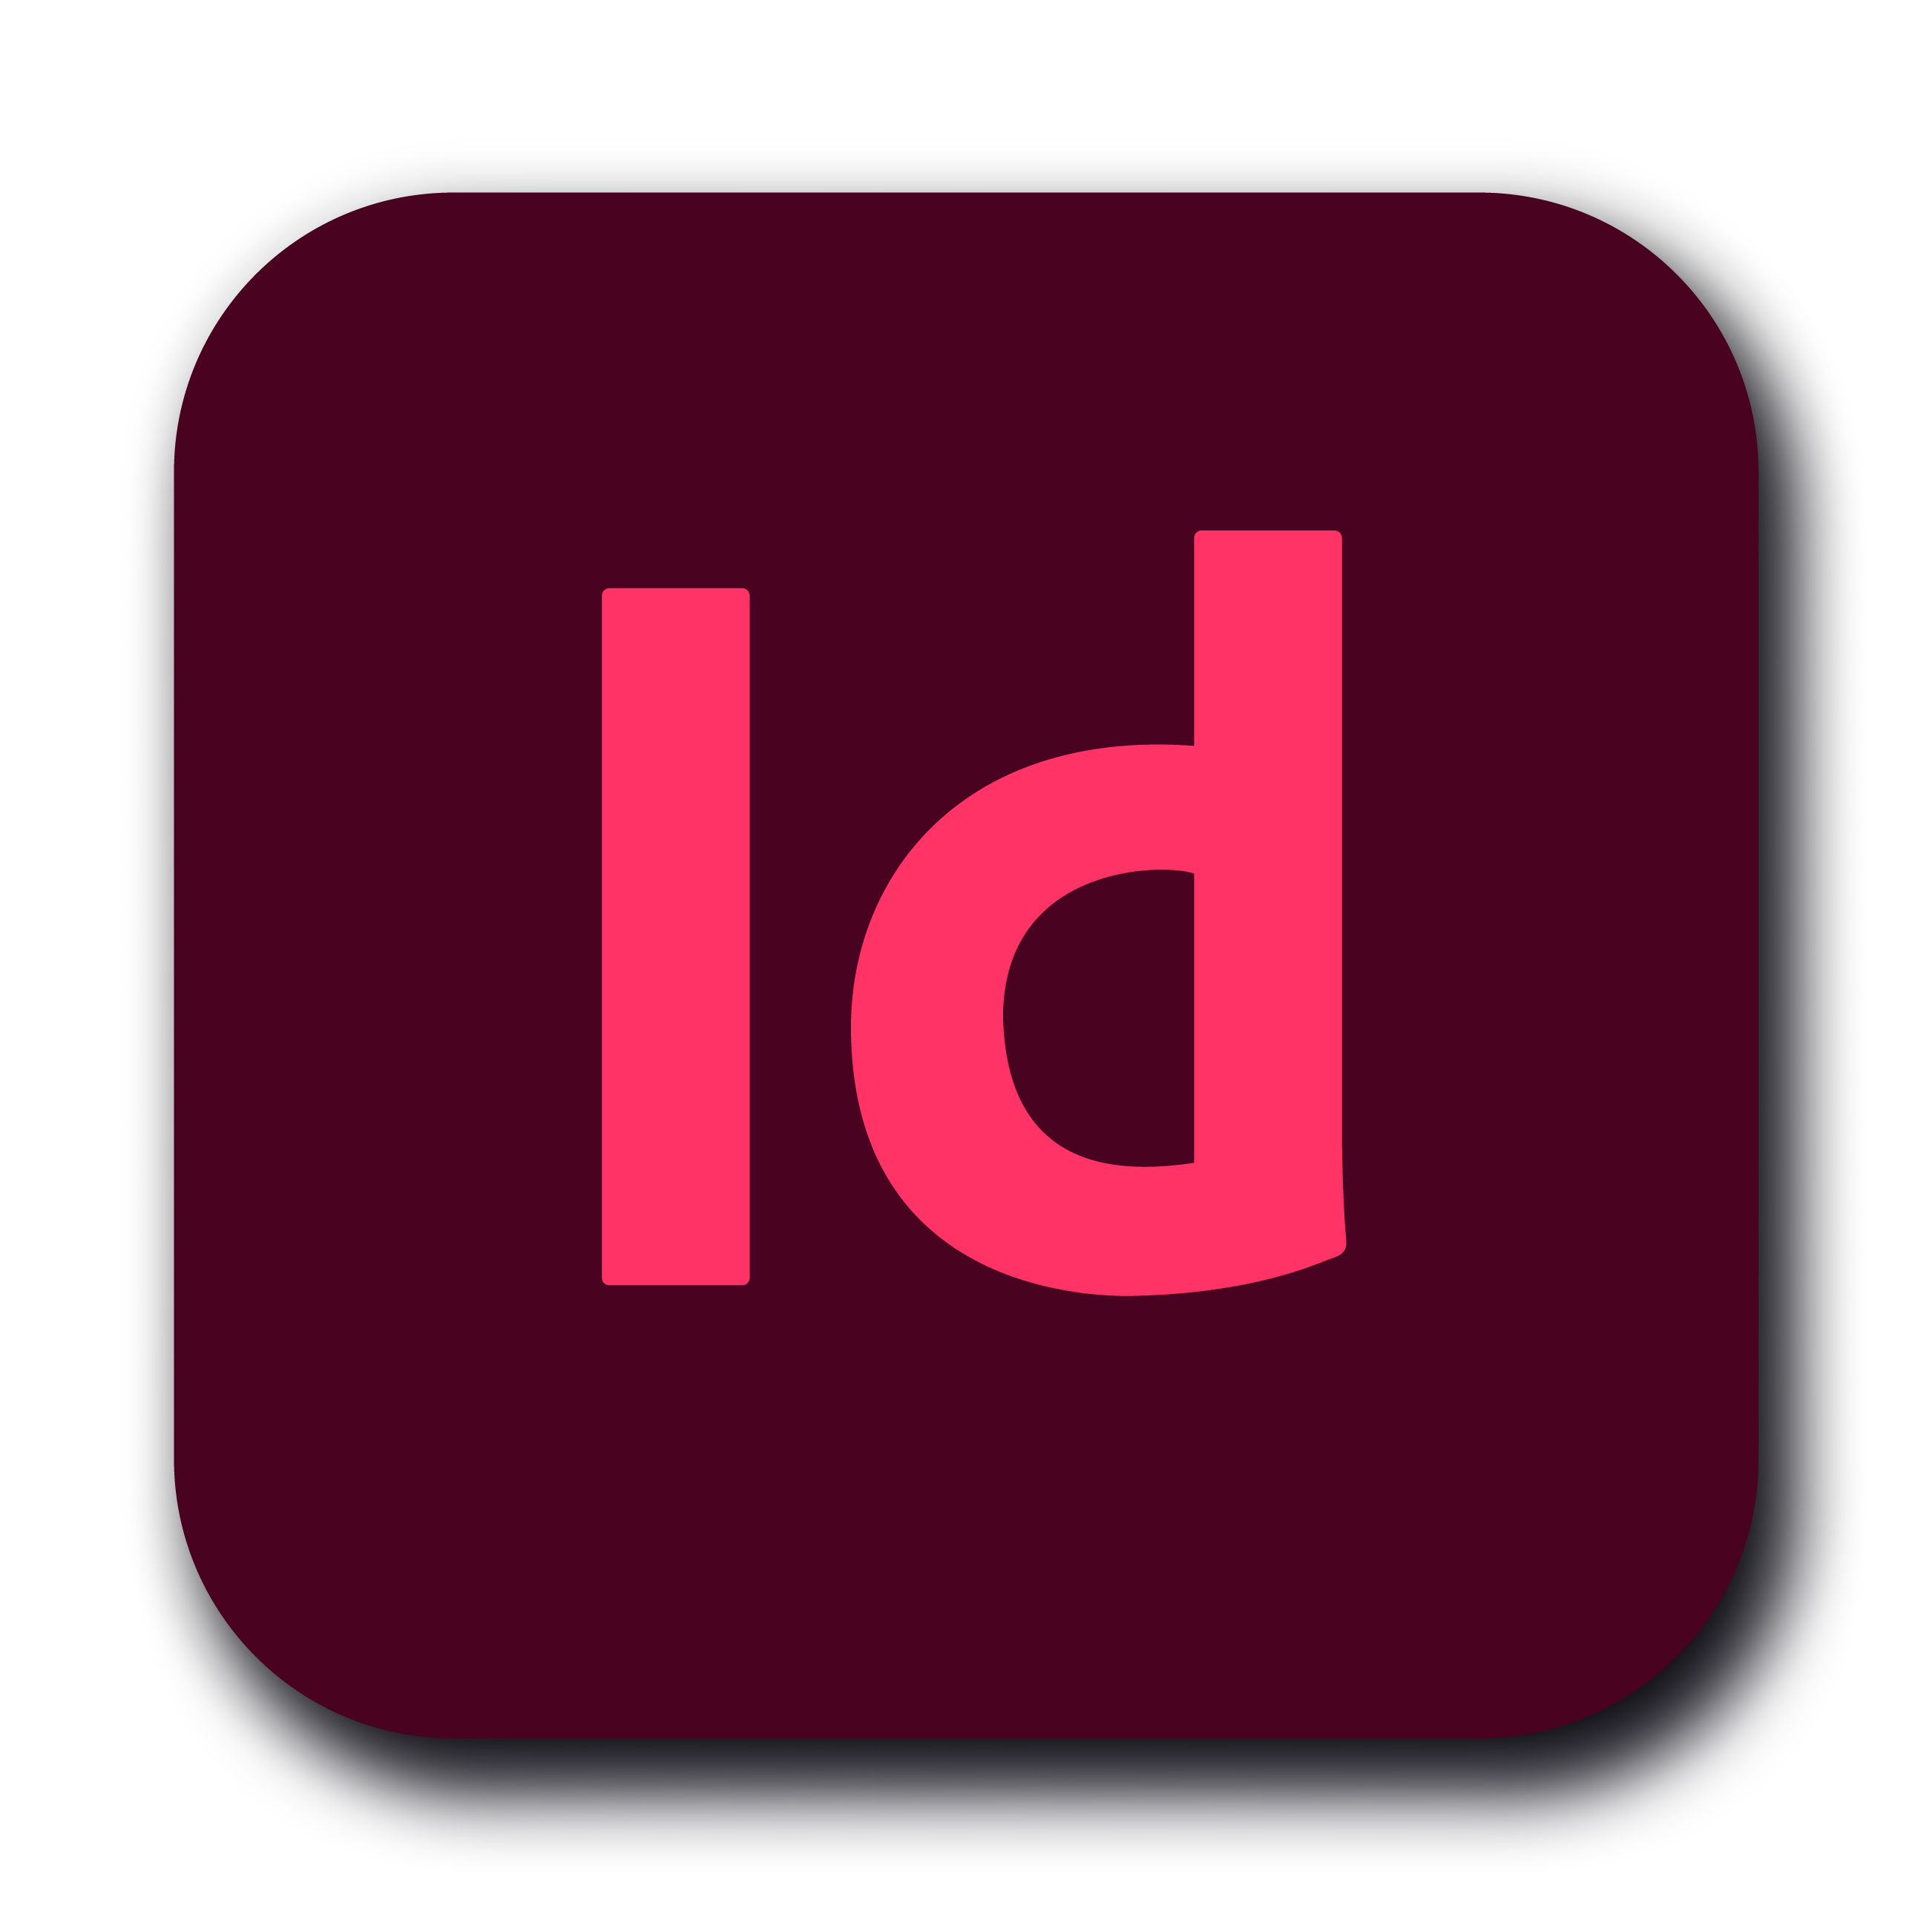 InDesign Logo